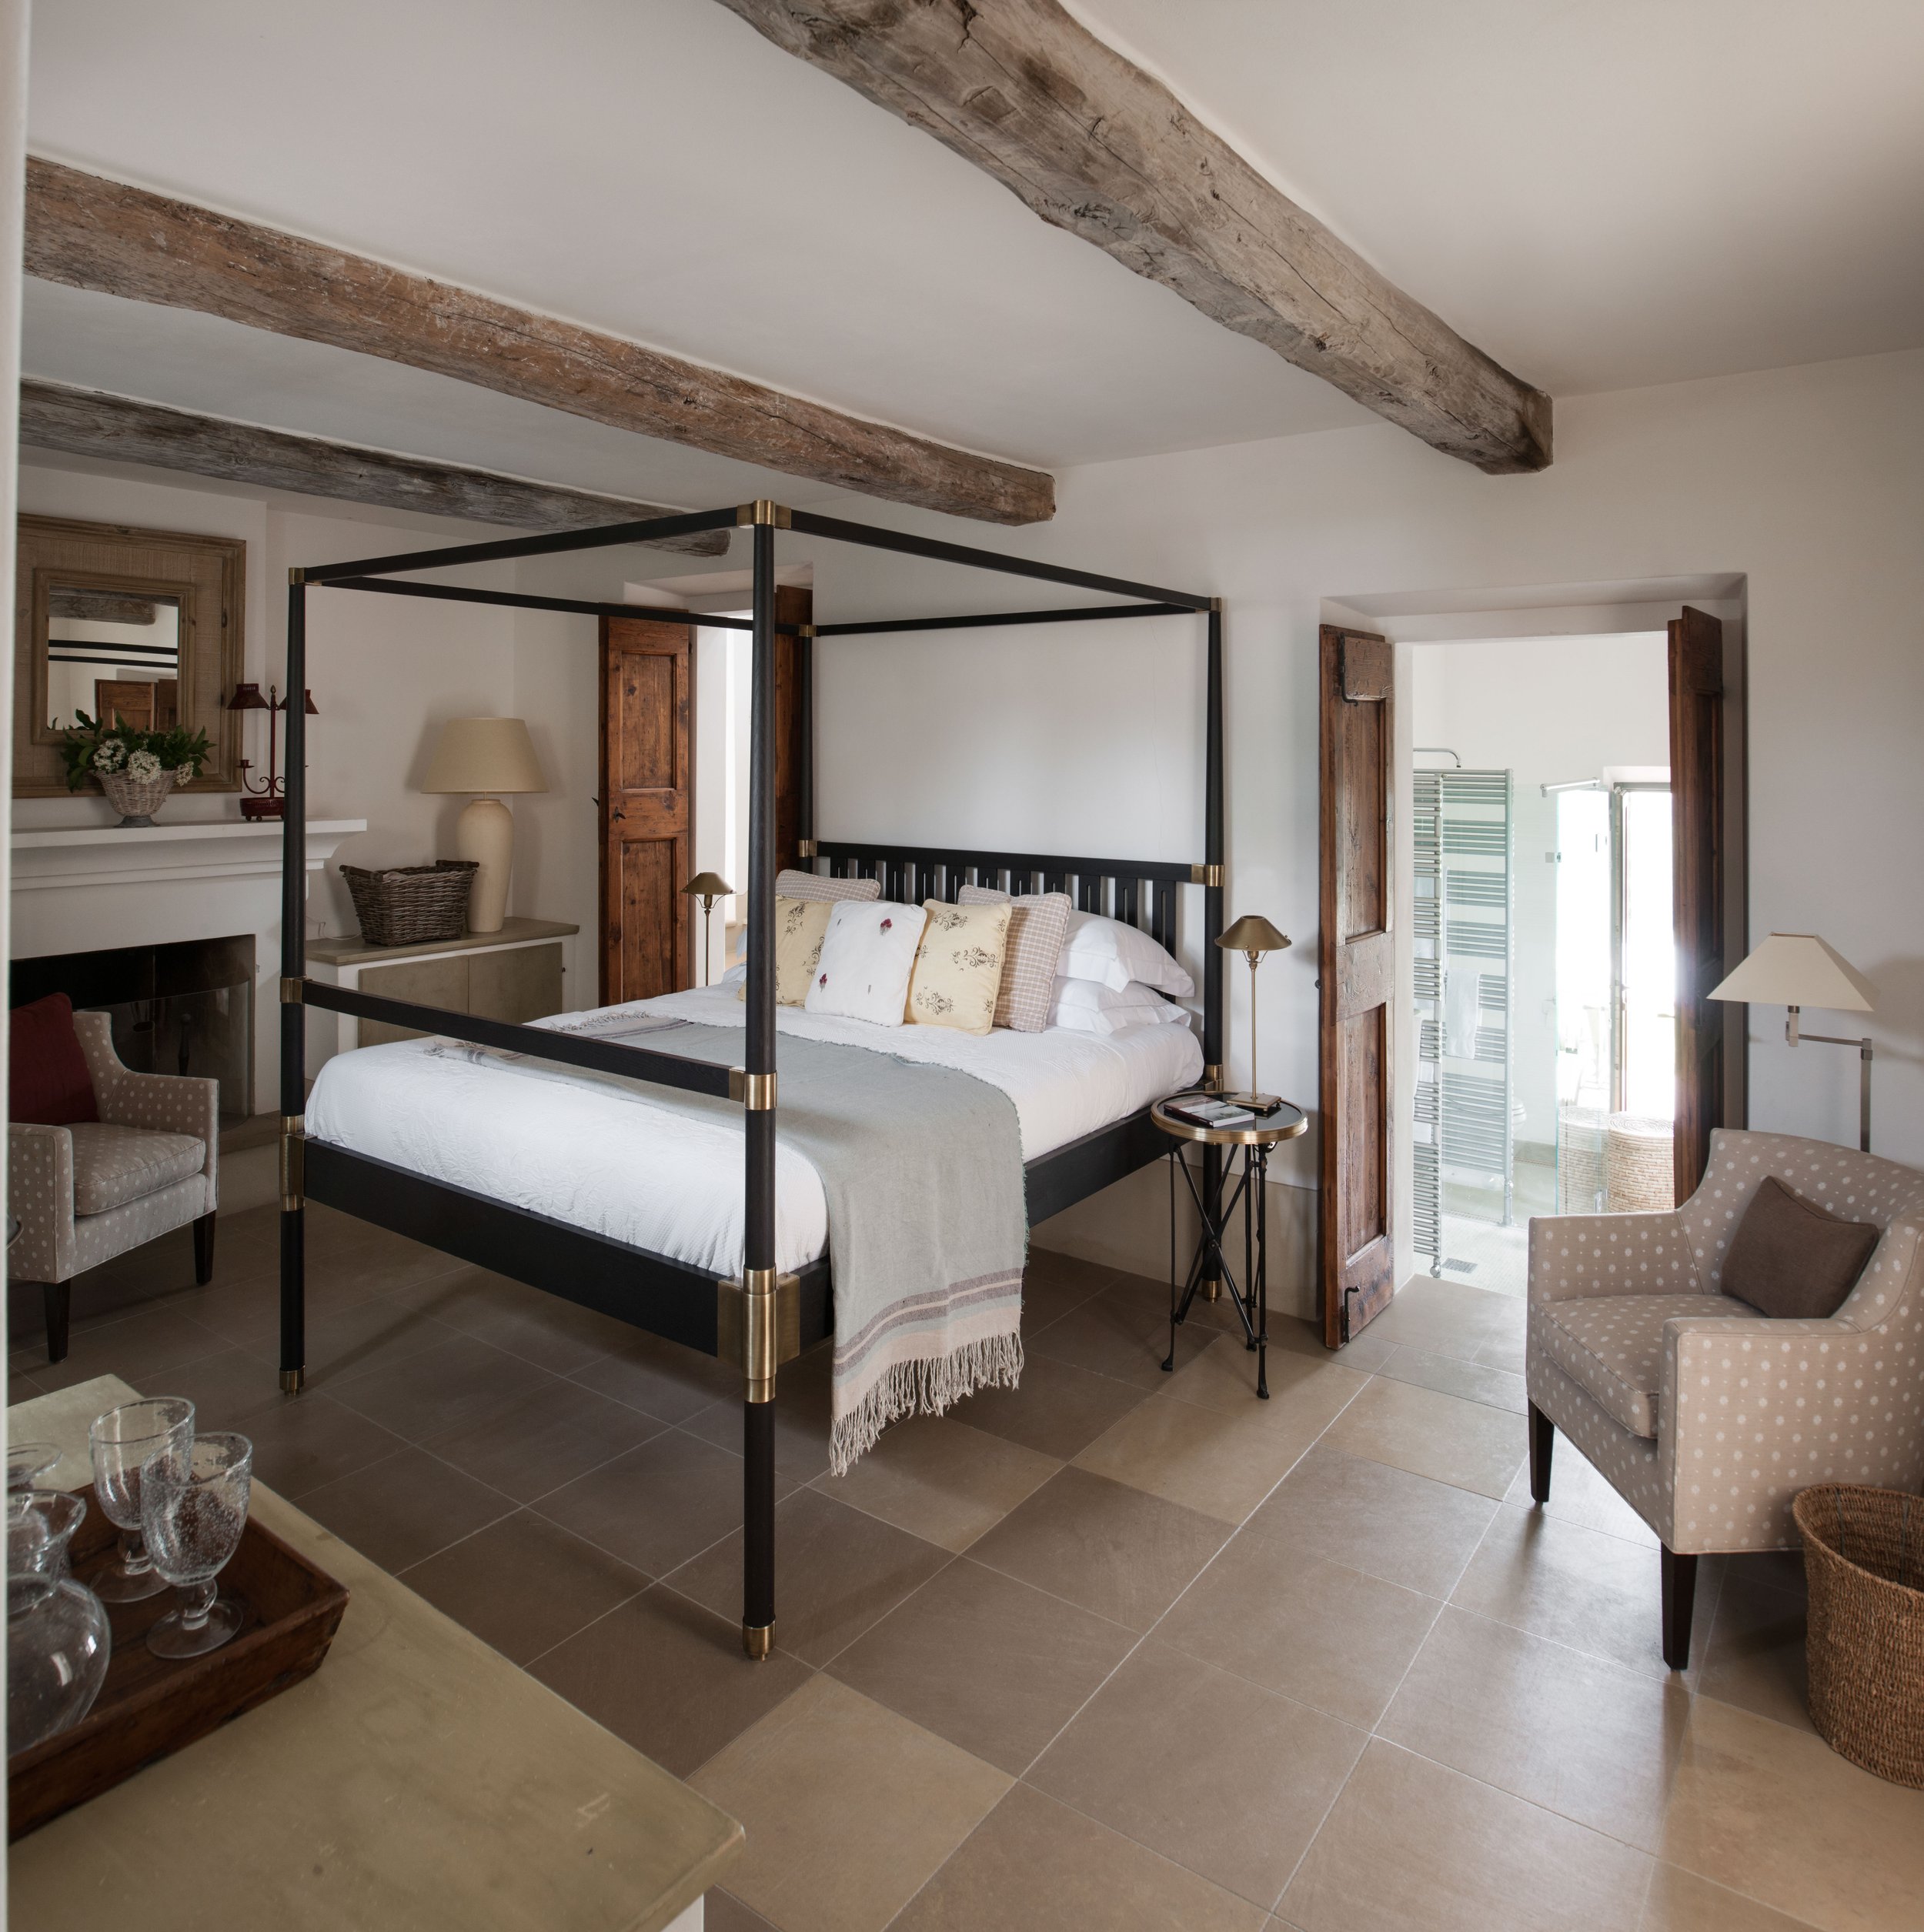 Francis York Exclusive Luxury Villa Rental in Umbria, Italy 20.jpg